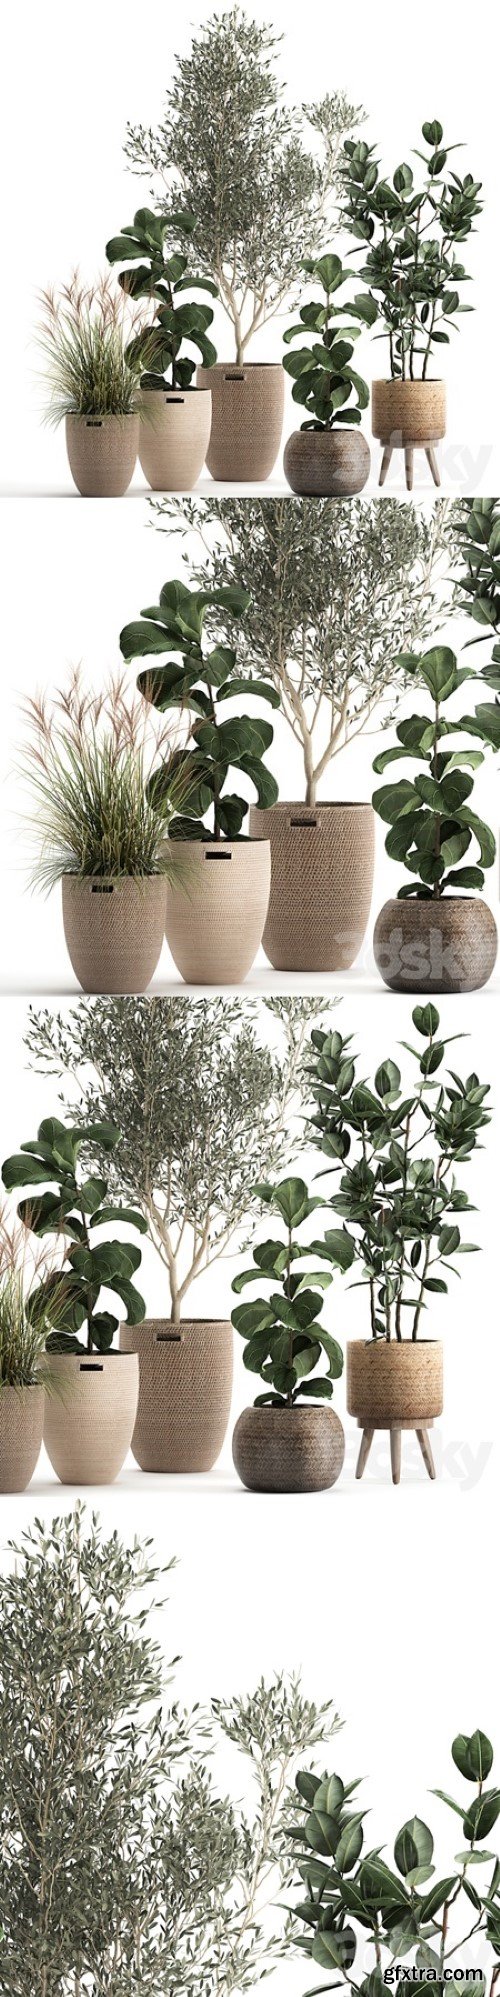 Pro 3DSky -  Plant collection 972. Olive, basket, rattan, tree, reed, flowerpot, eco design, Scandinavian style